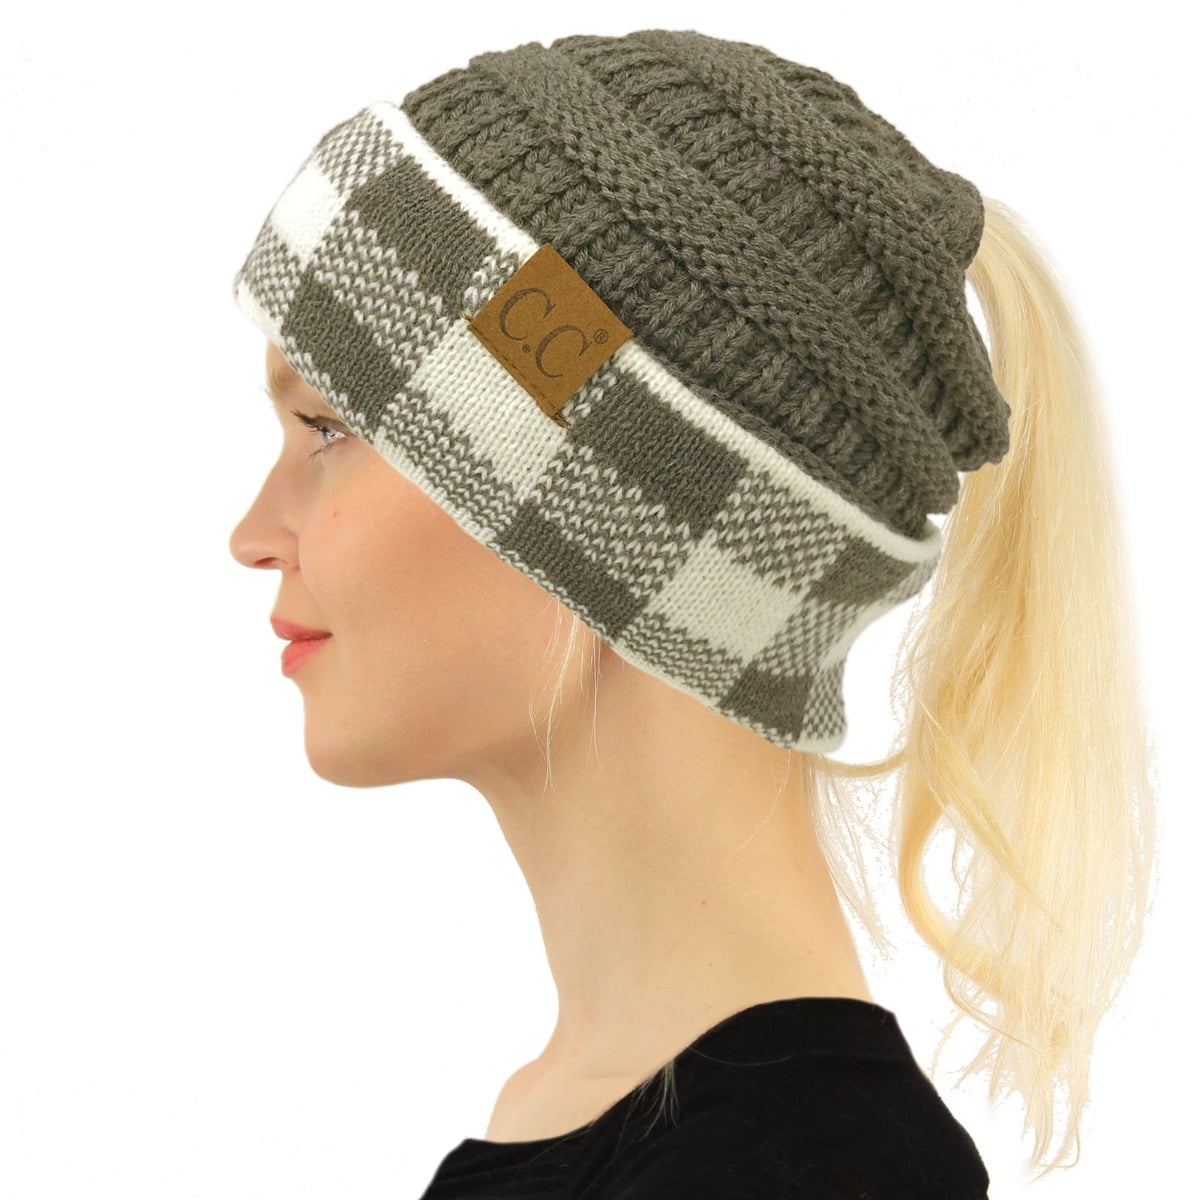 CC Ponytail Messy Bun BeanieTail Soft Winter Knit Stretch Beanie Hat (Buffalo Plaid Dk. Melange Gray/White) - image 1 of 2